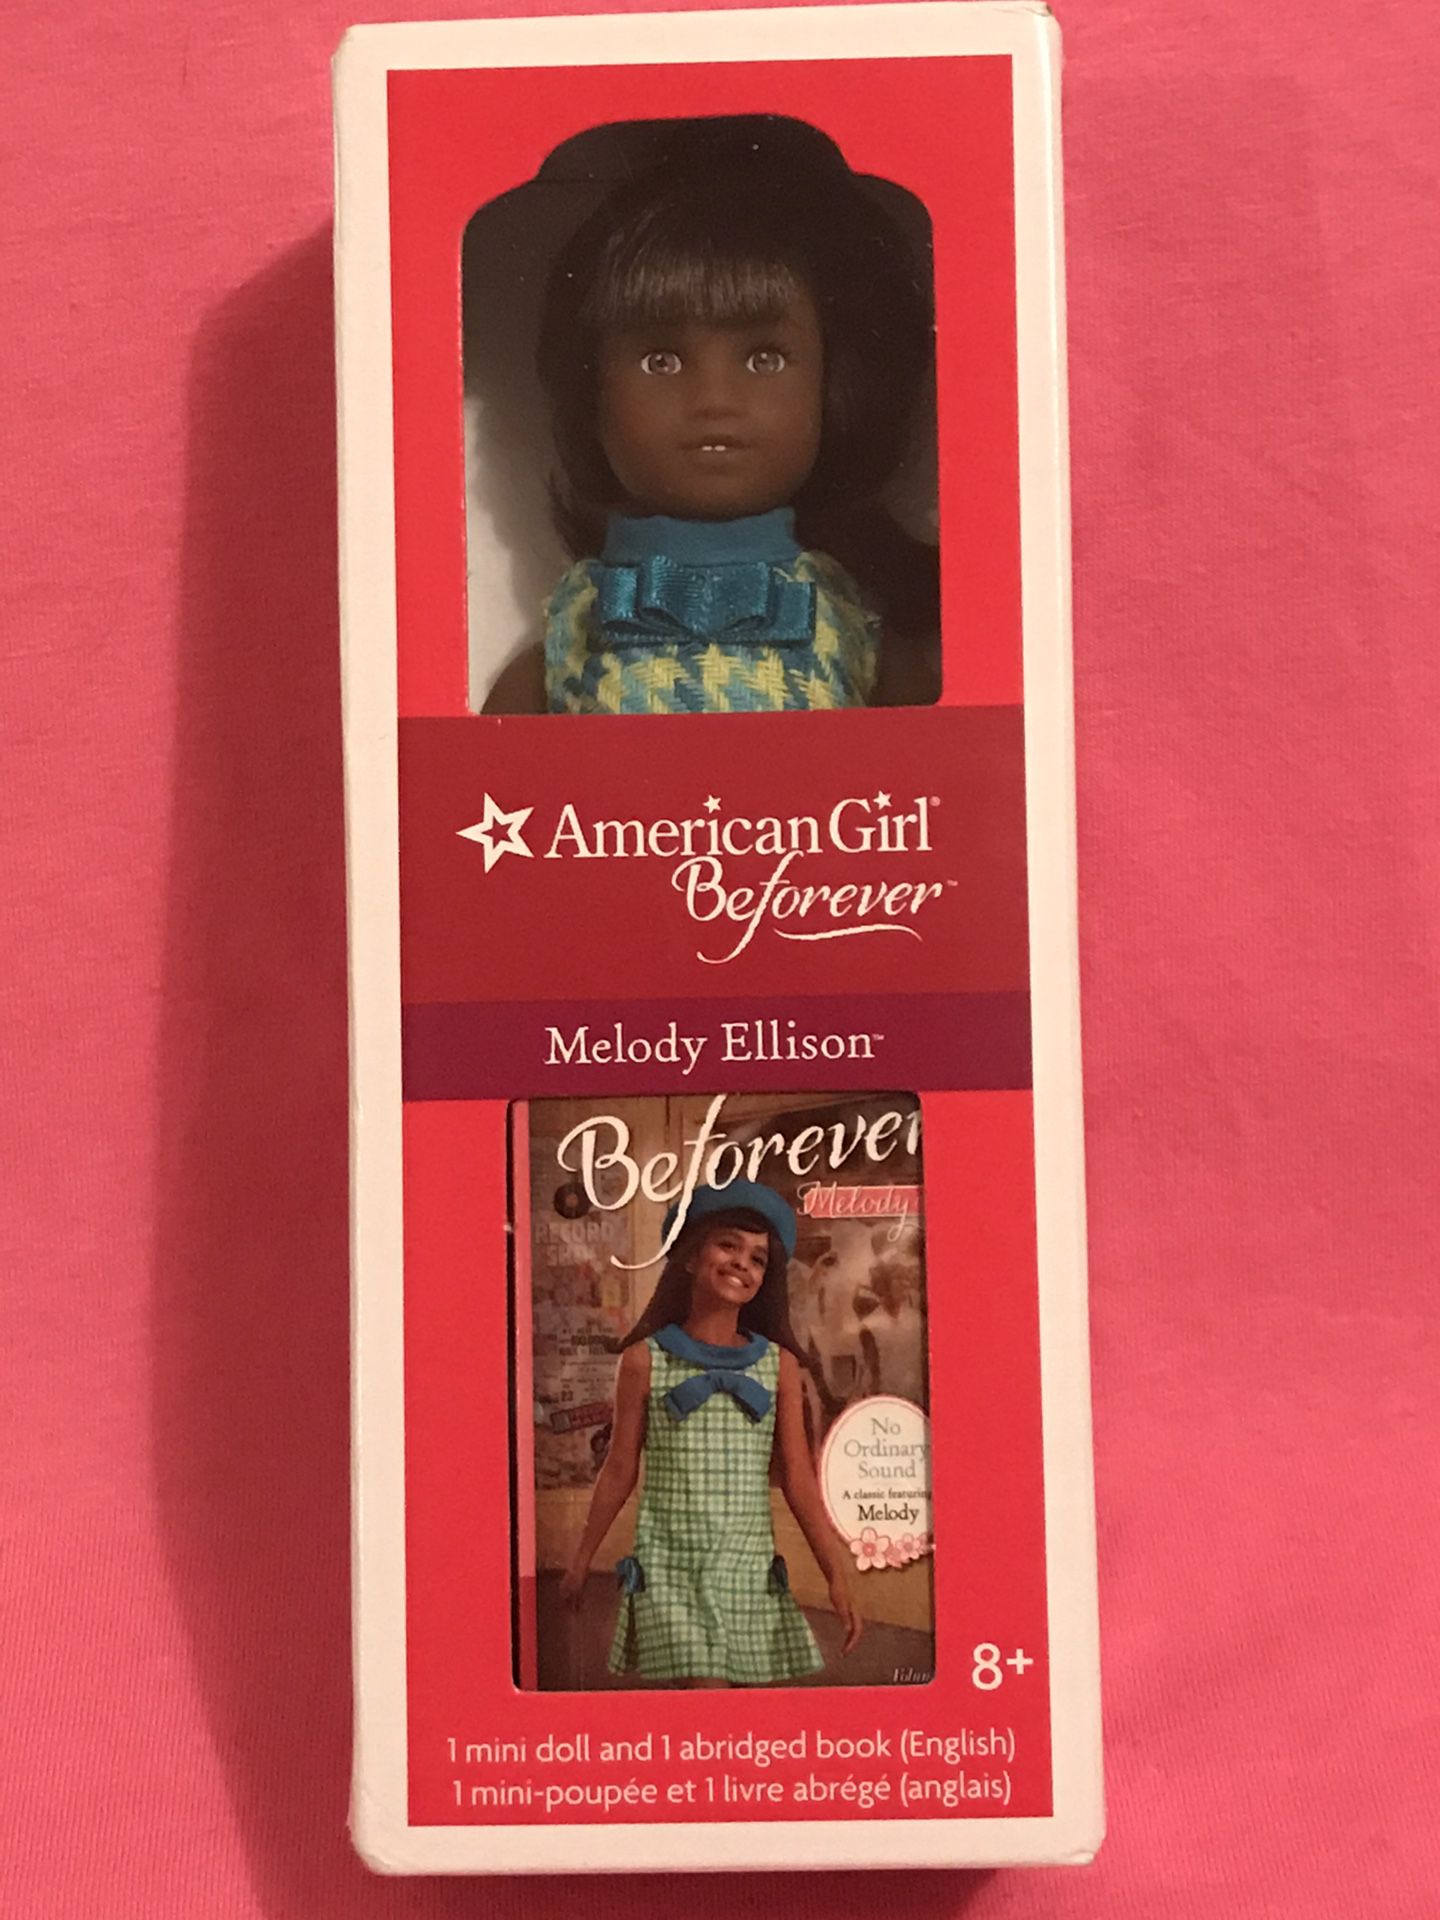 New! American Girl Mini Doll “Melody”